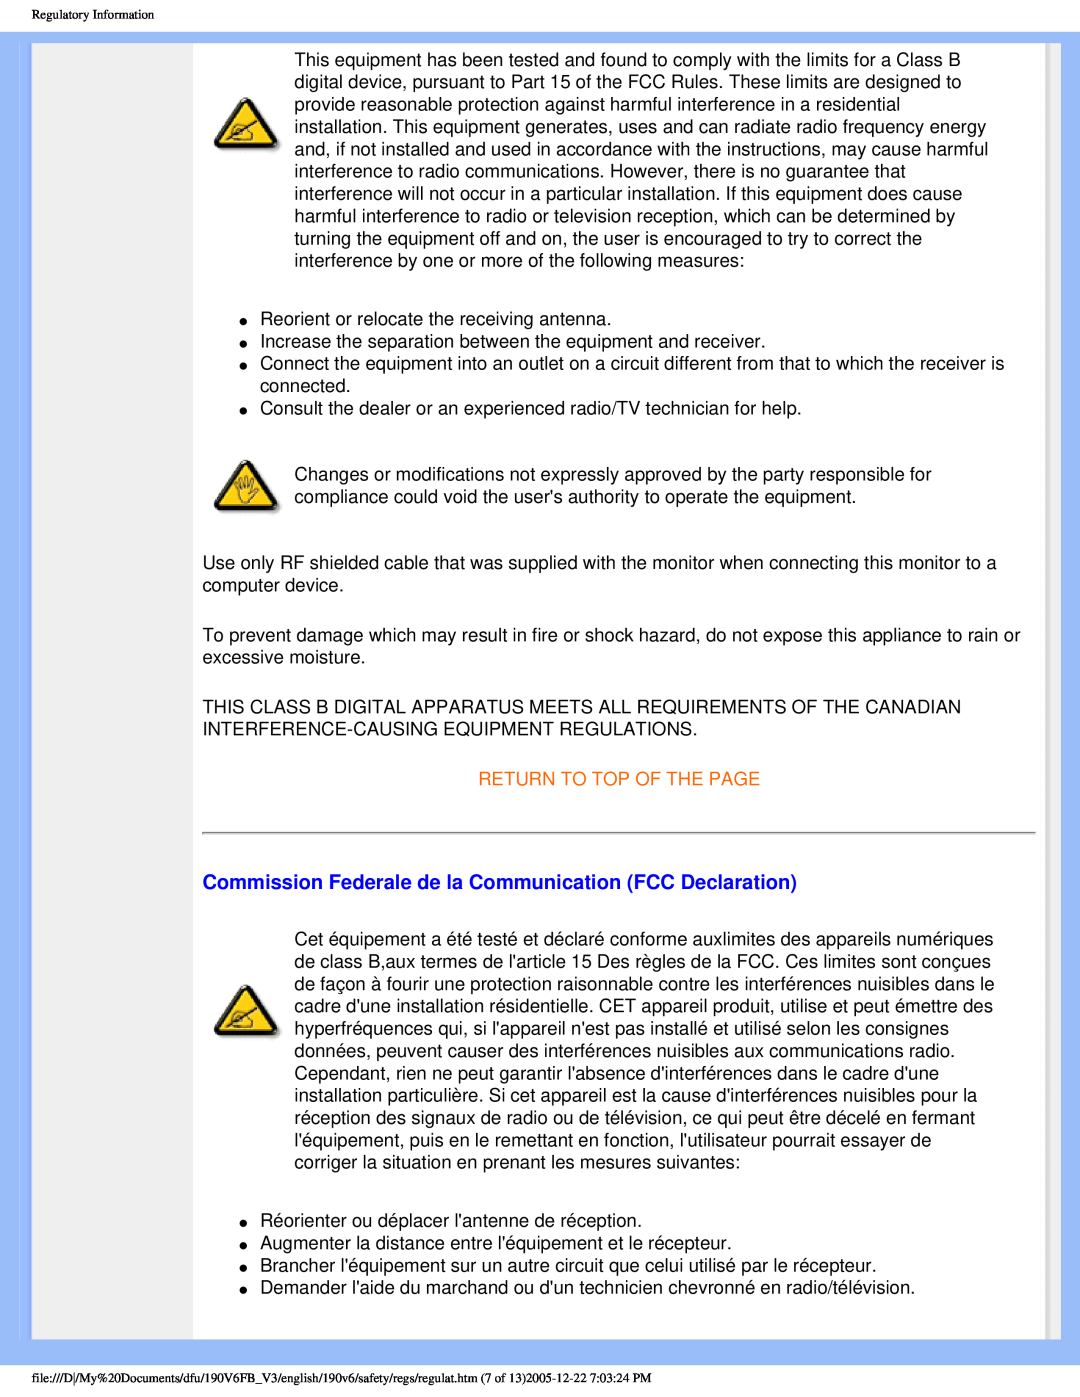 Philips 190V6FB user manual Commission Federale de la Communication FCC Declaration, Return To Top Of The Page 